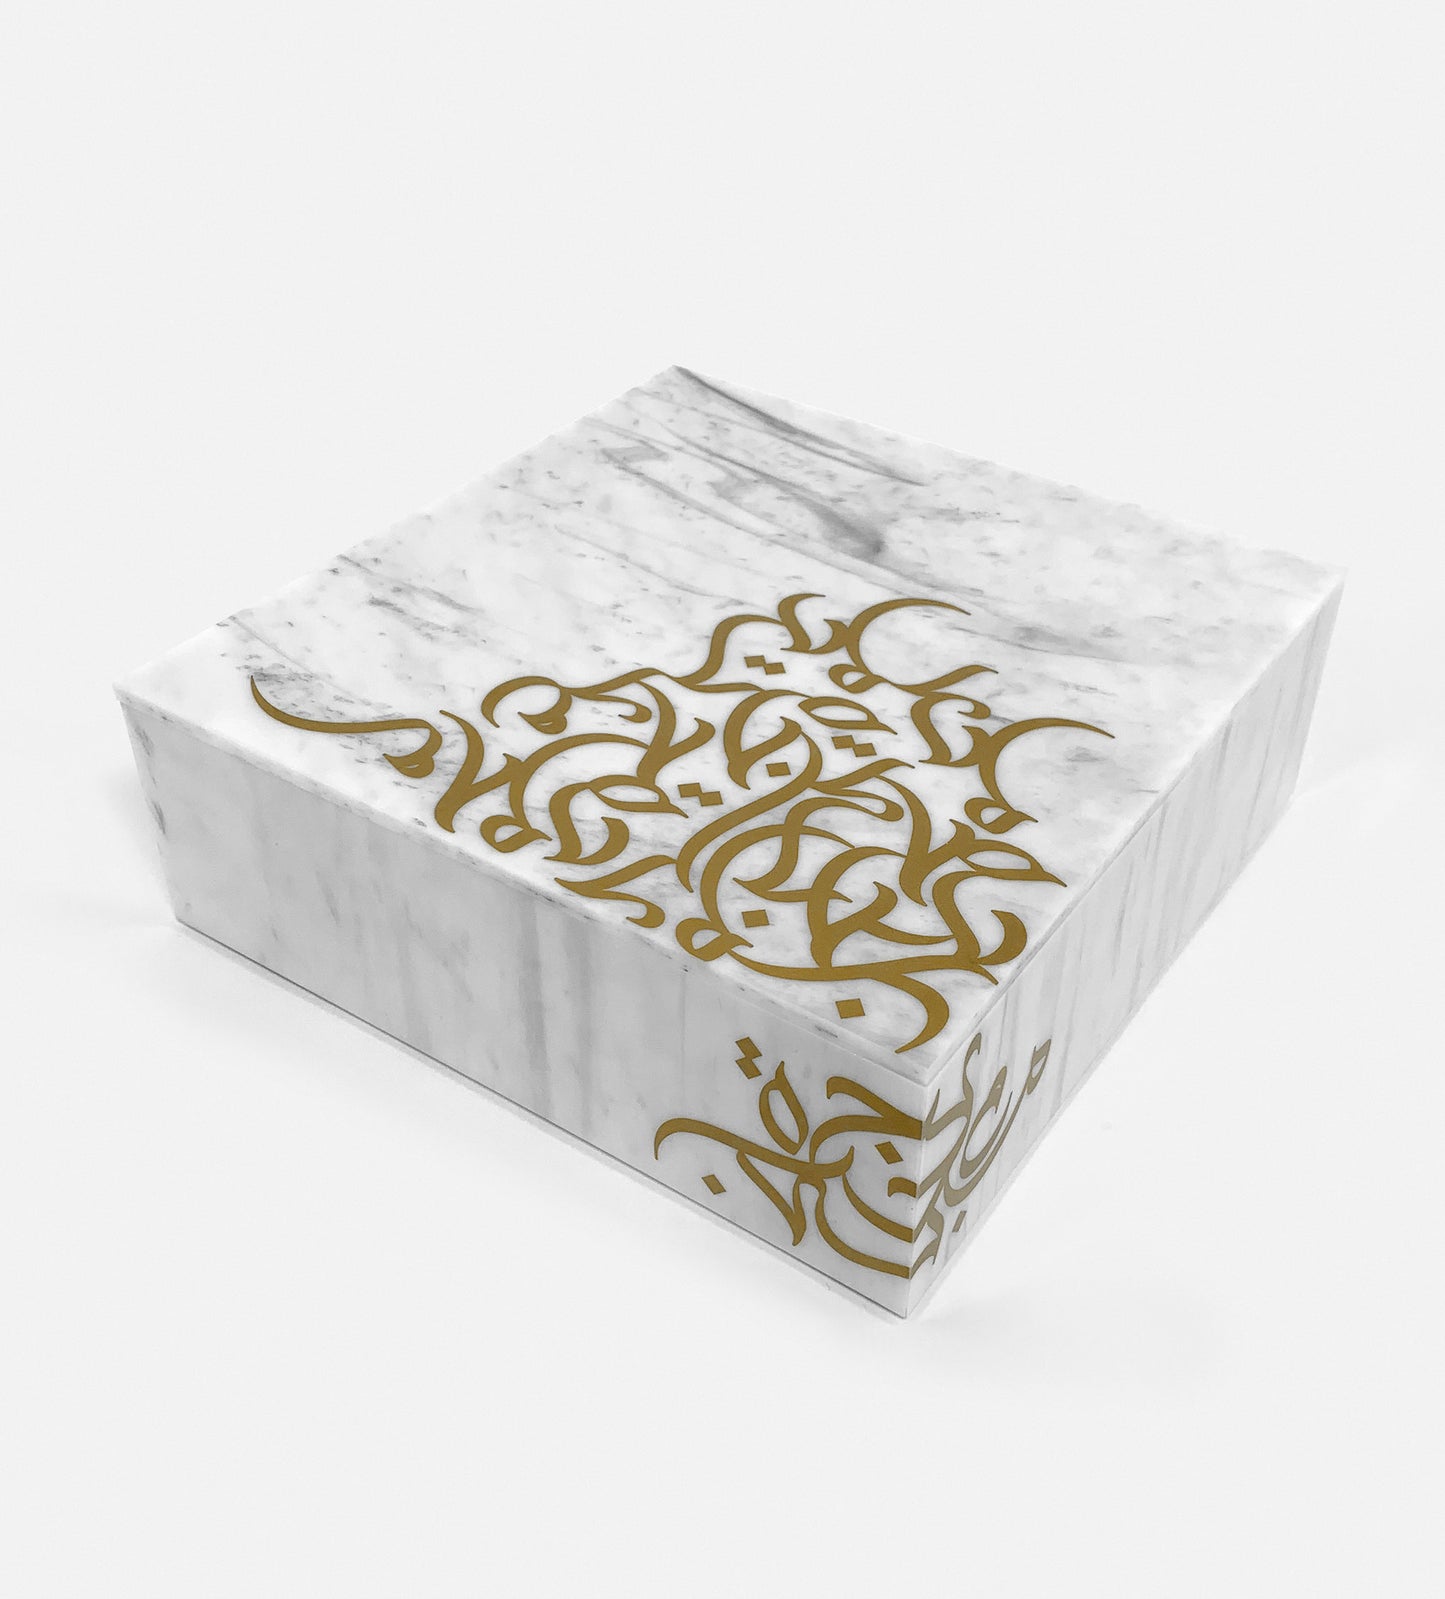 Medium square marble acrylic storage box with Arabic graffiti print